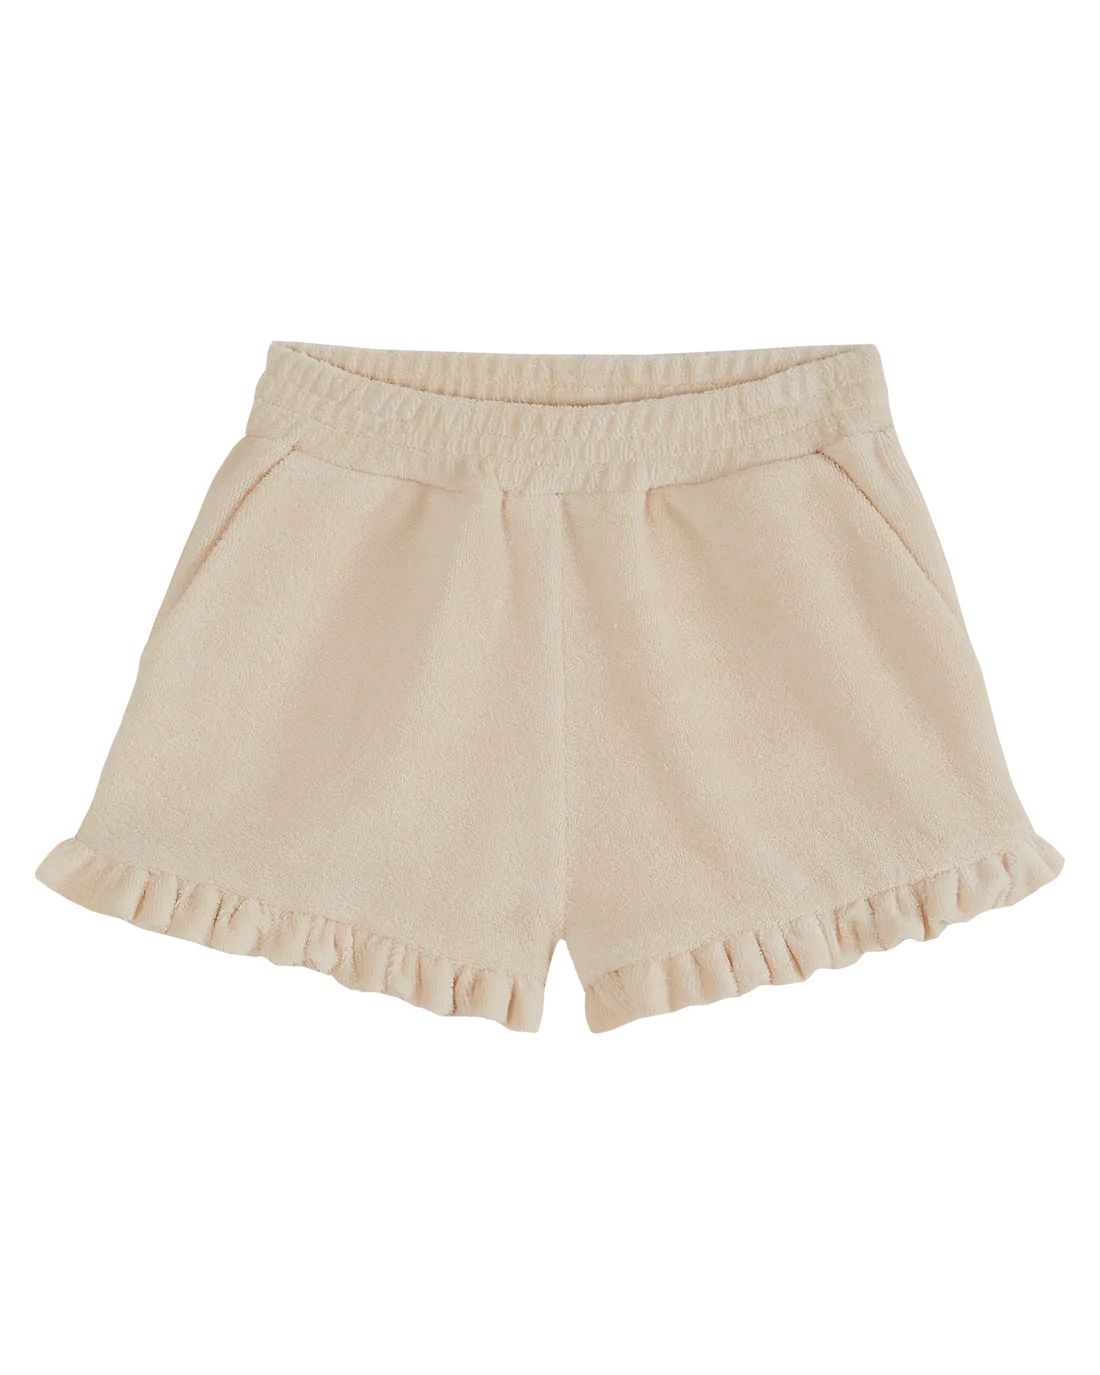 cream terry shorts